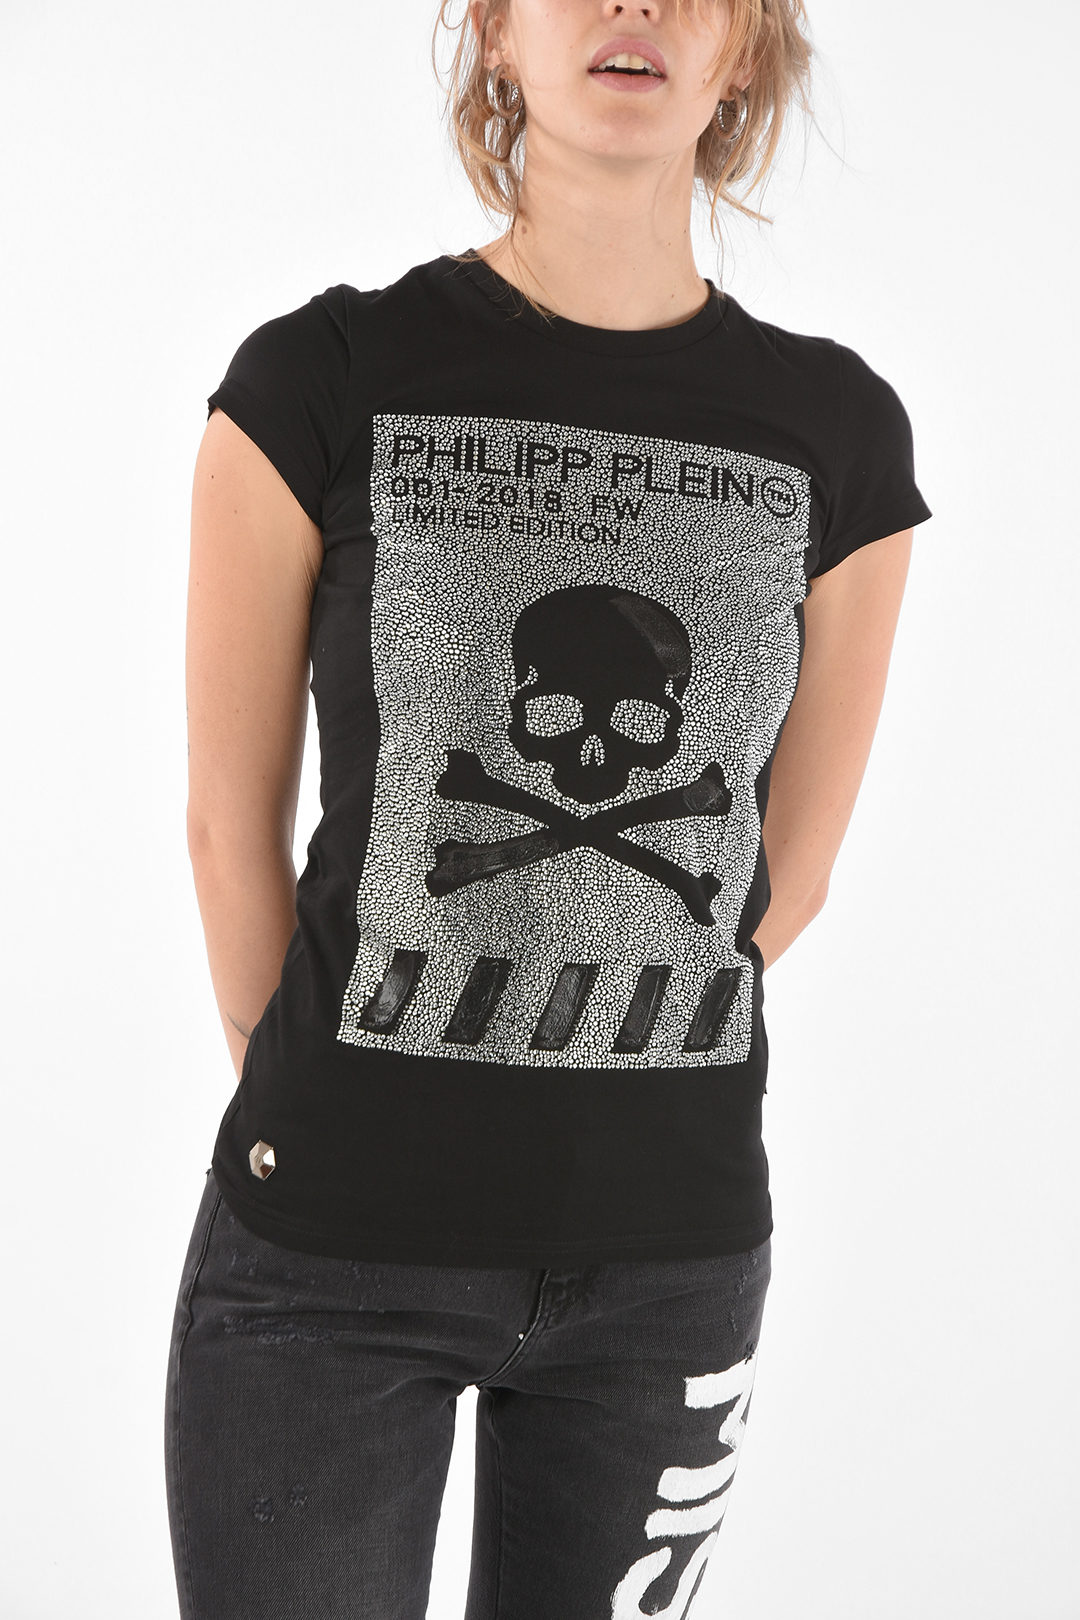 Hervat Korst Havoc Philipp Plein Crew Neck SKULL Strass T-Shirt women - Glamood Outlet